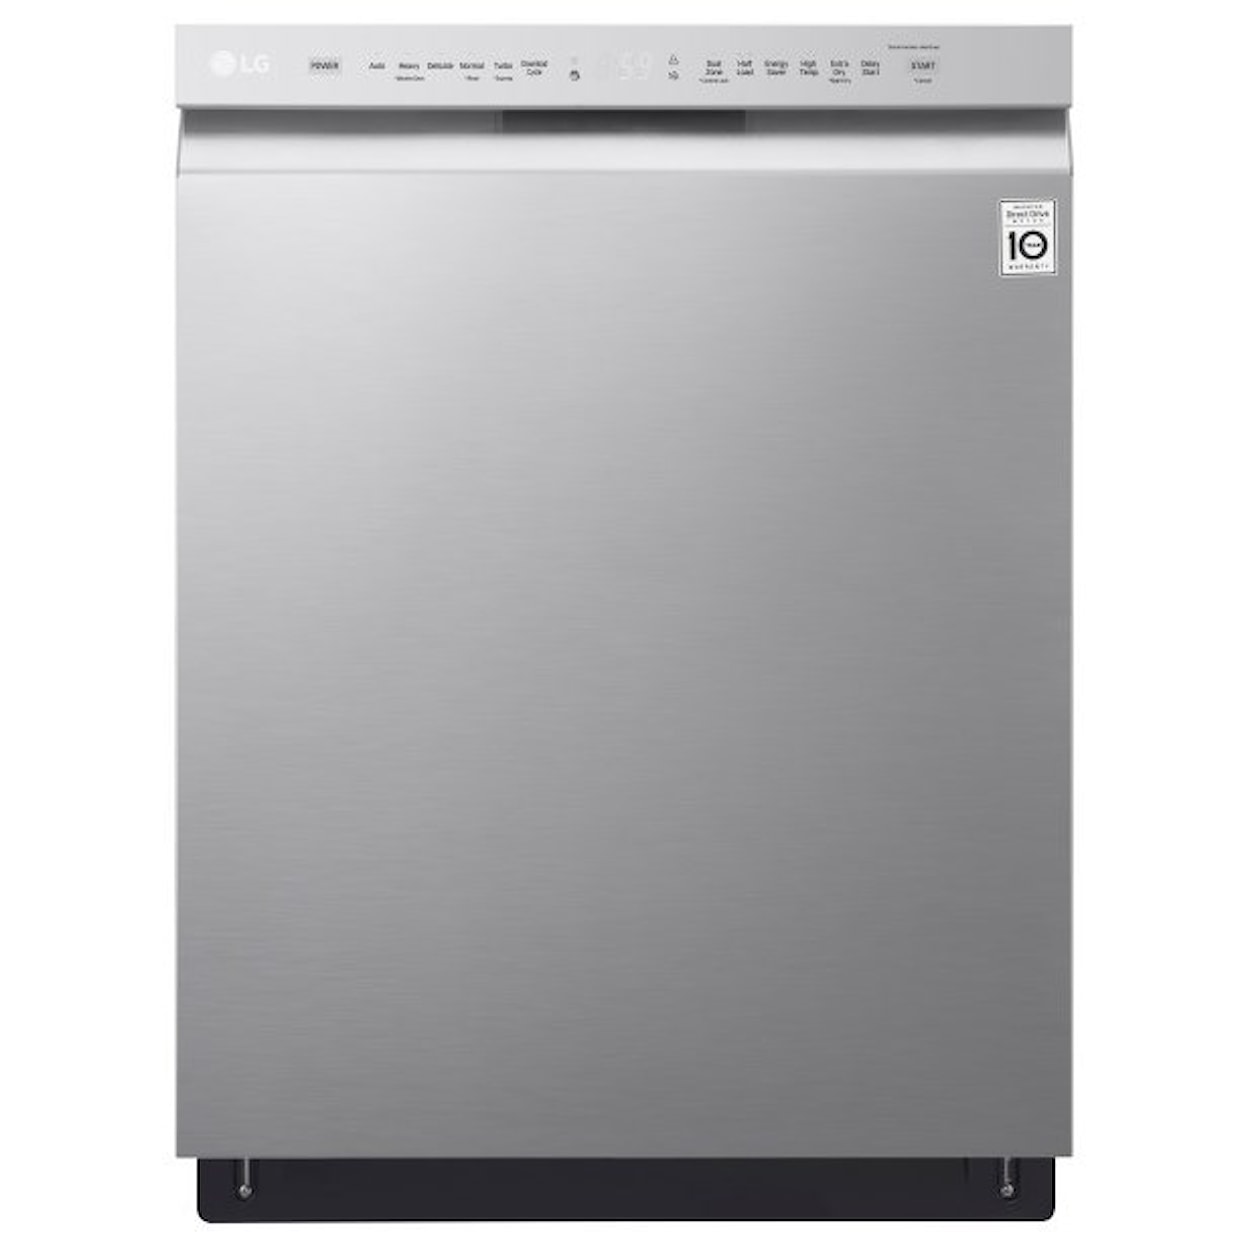 LG Appliances Dishwashers Front Control QuadWash™ Dishwasher